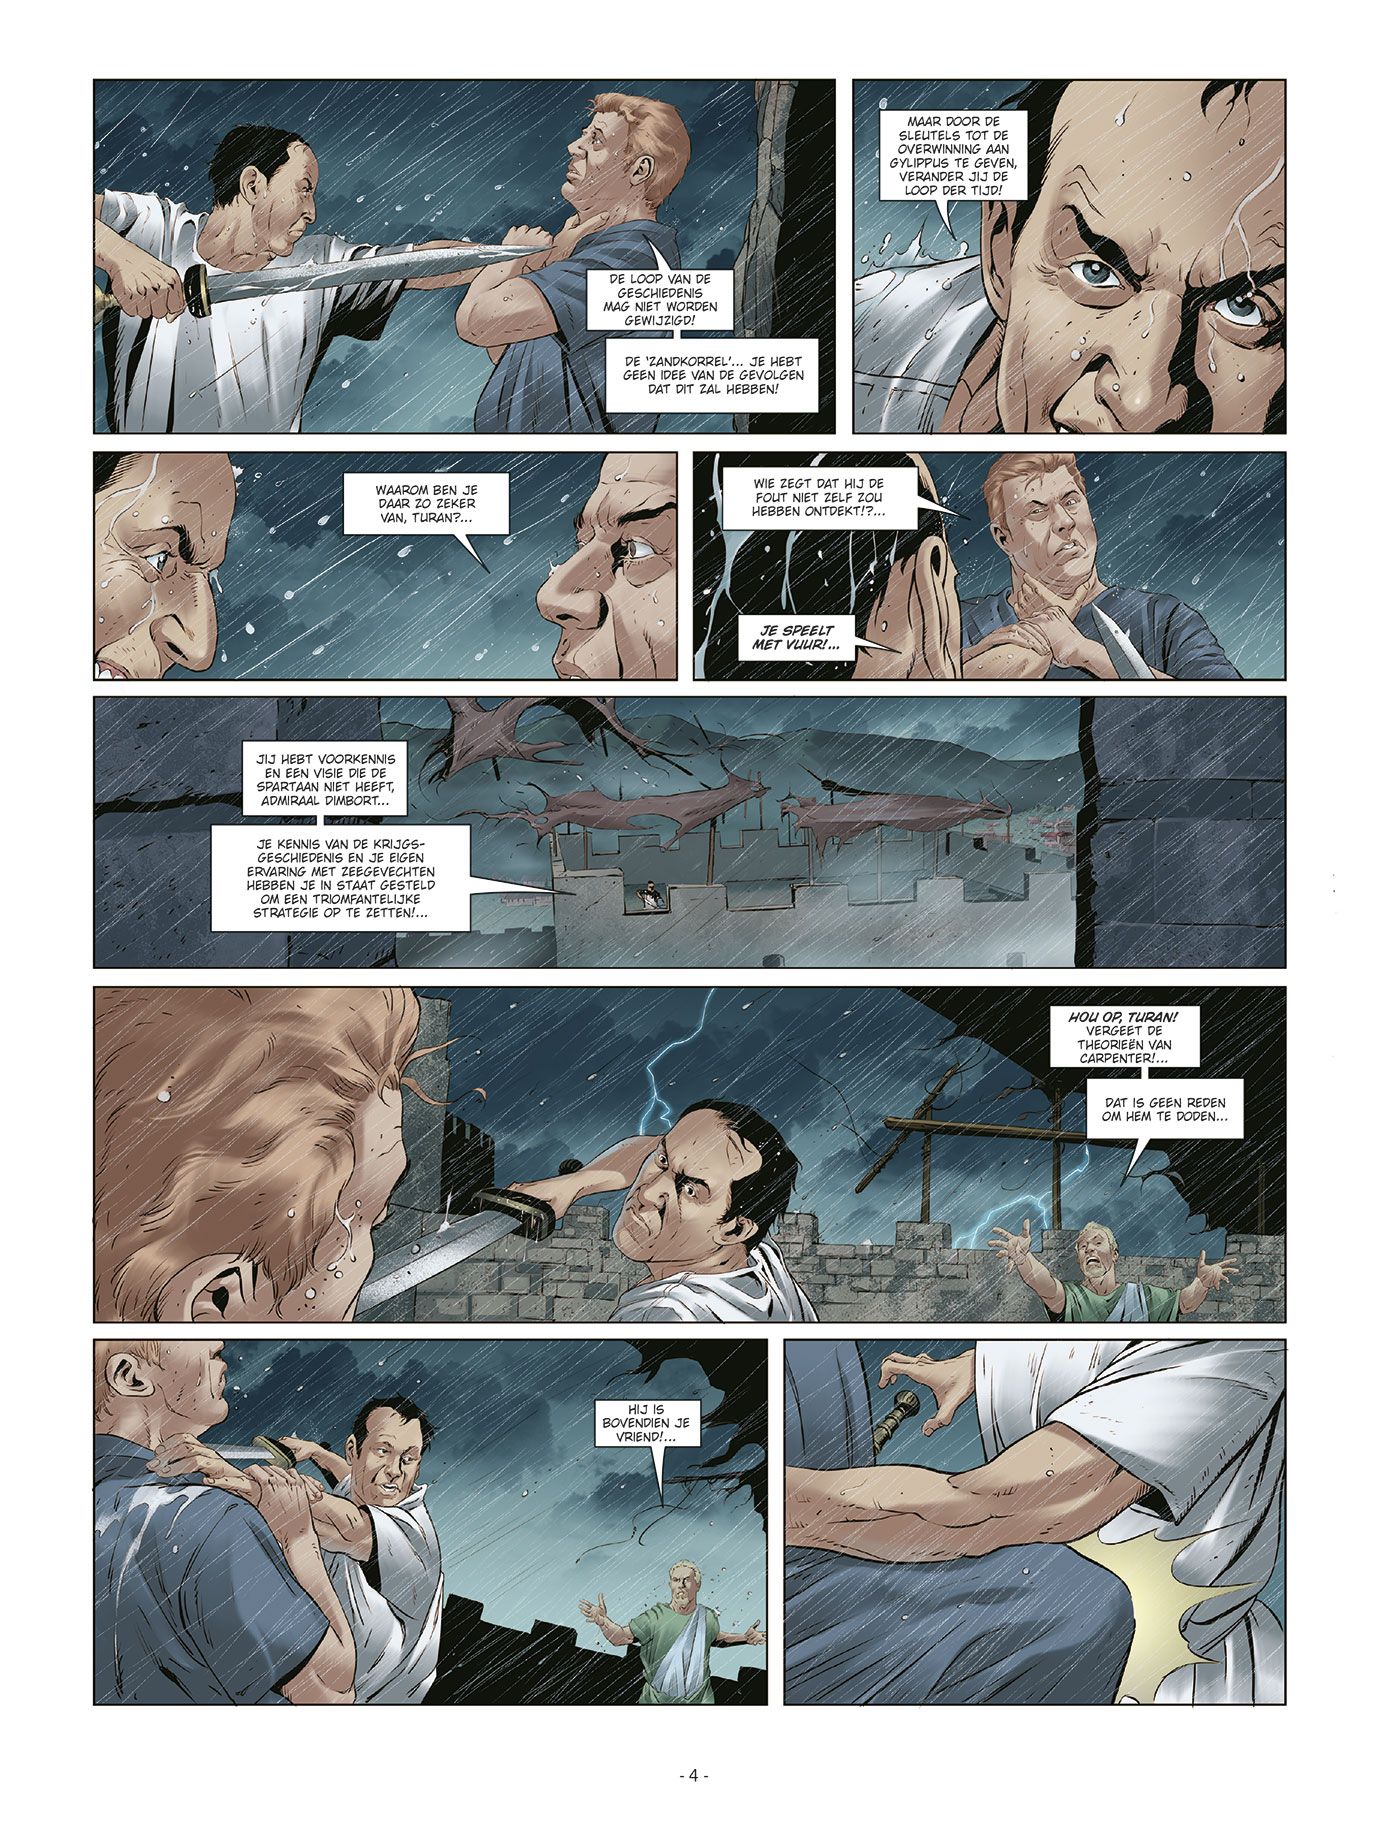 Prometheus 19 pagina 2